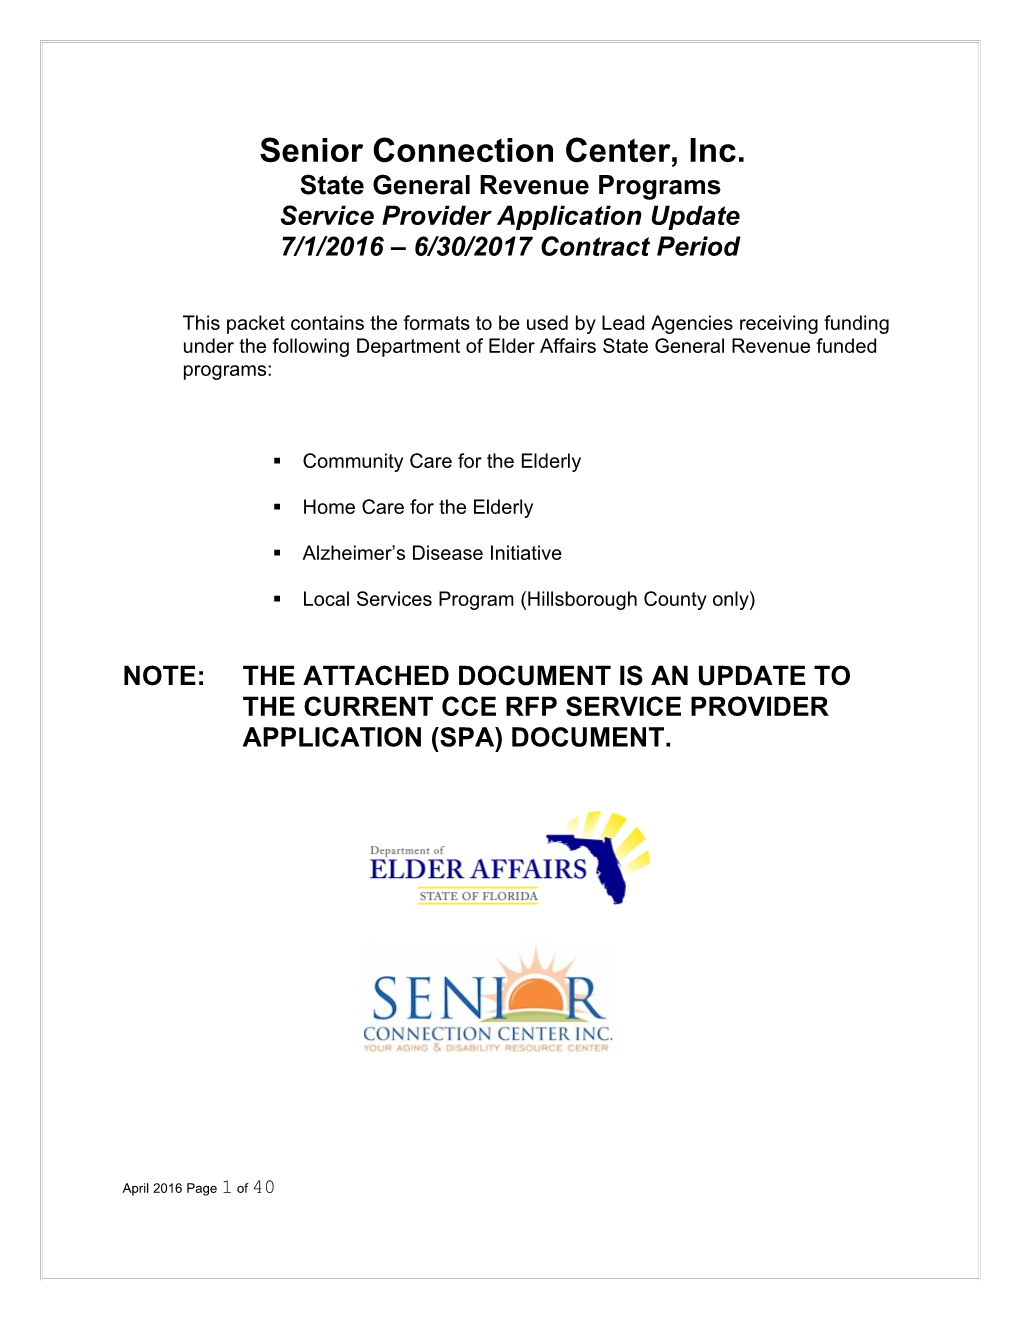 State General Revenue Programs s1